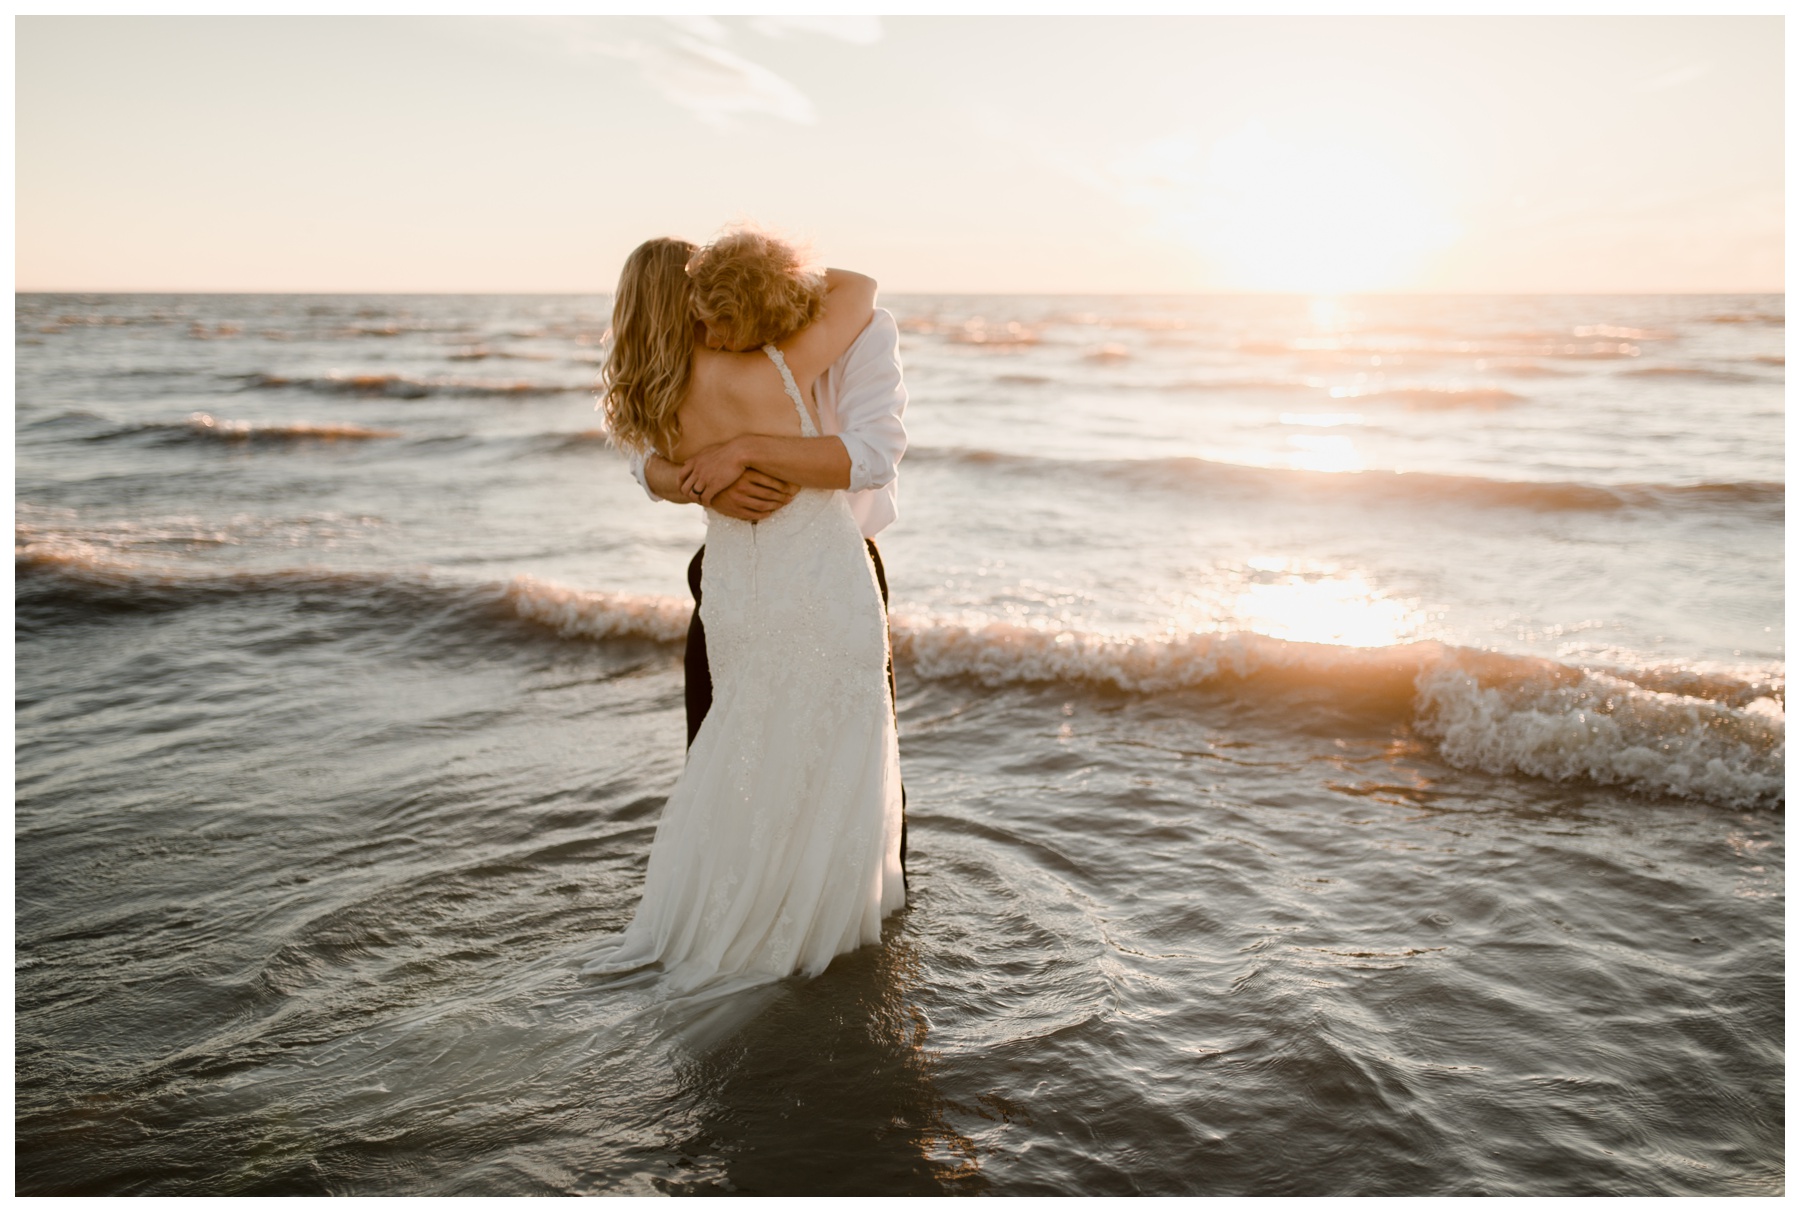 Wreck the Dress Session - Grand Beach Manitoba - Vanessa Renae Photography - Winnipeg Wedding Photographer